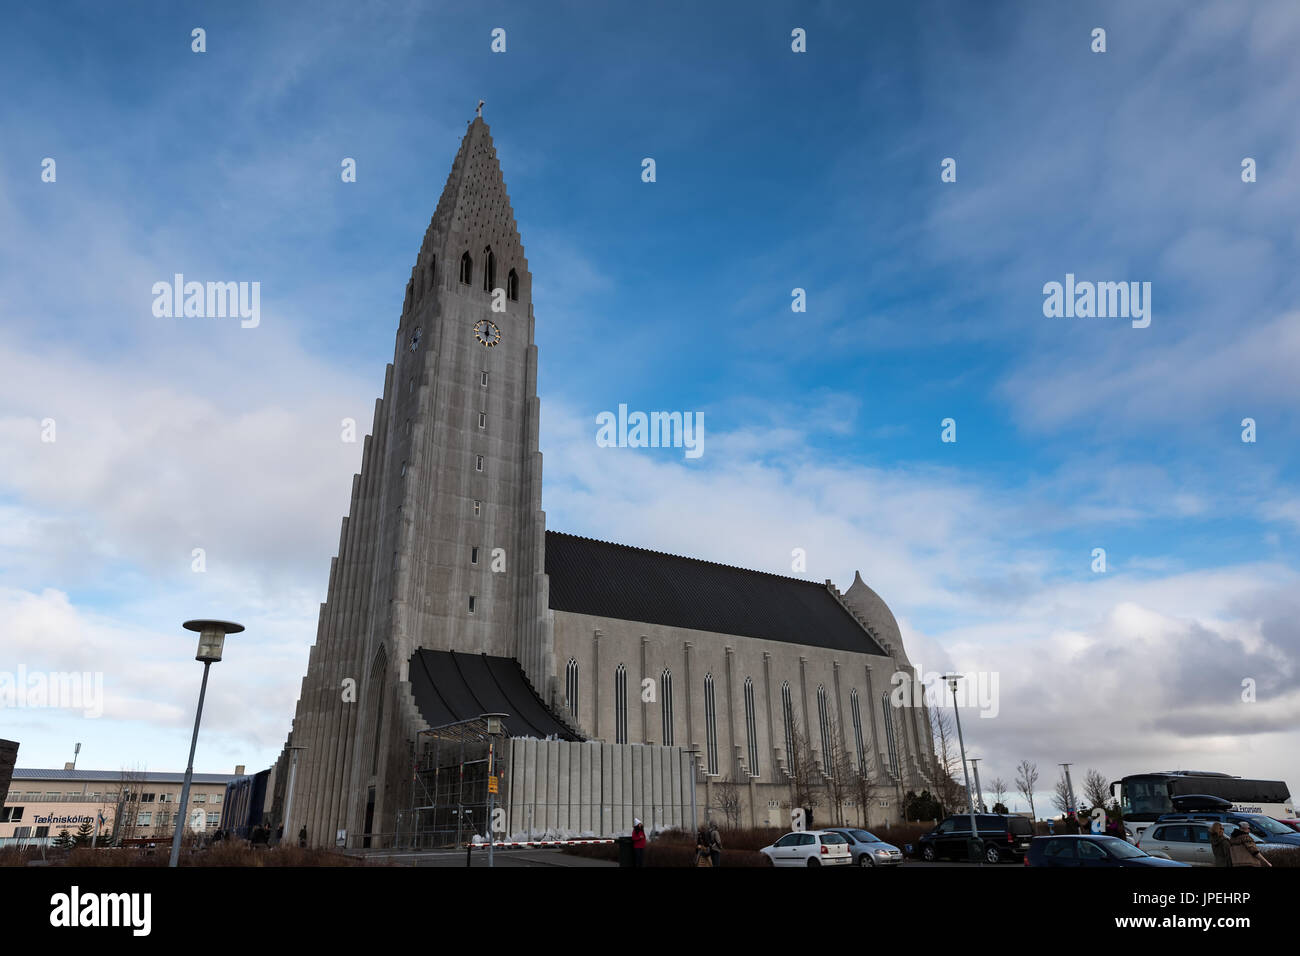 Reykjavik, Iceland - April 1, 2017: The famous Hallgrimskirkja Cathedral in city of Reykjavik in Iceland Stock Photo